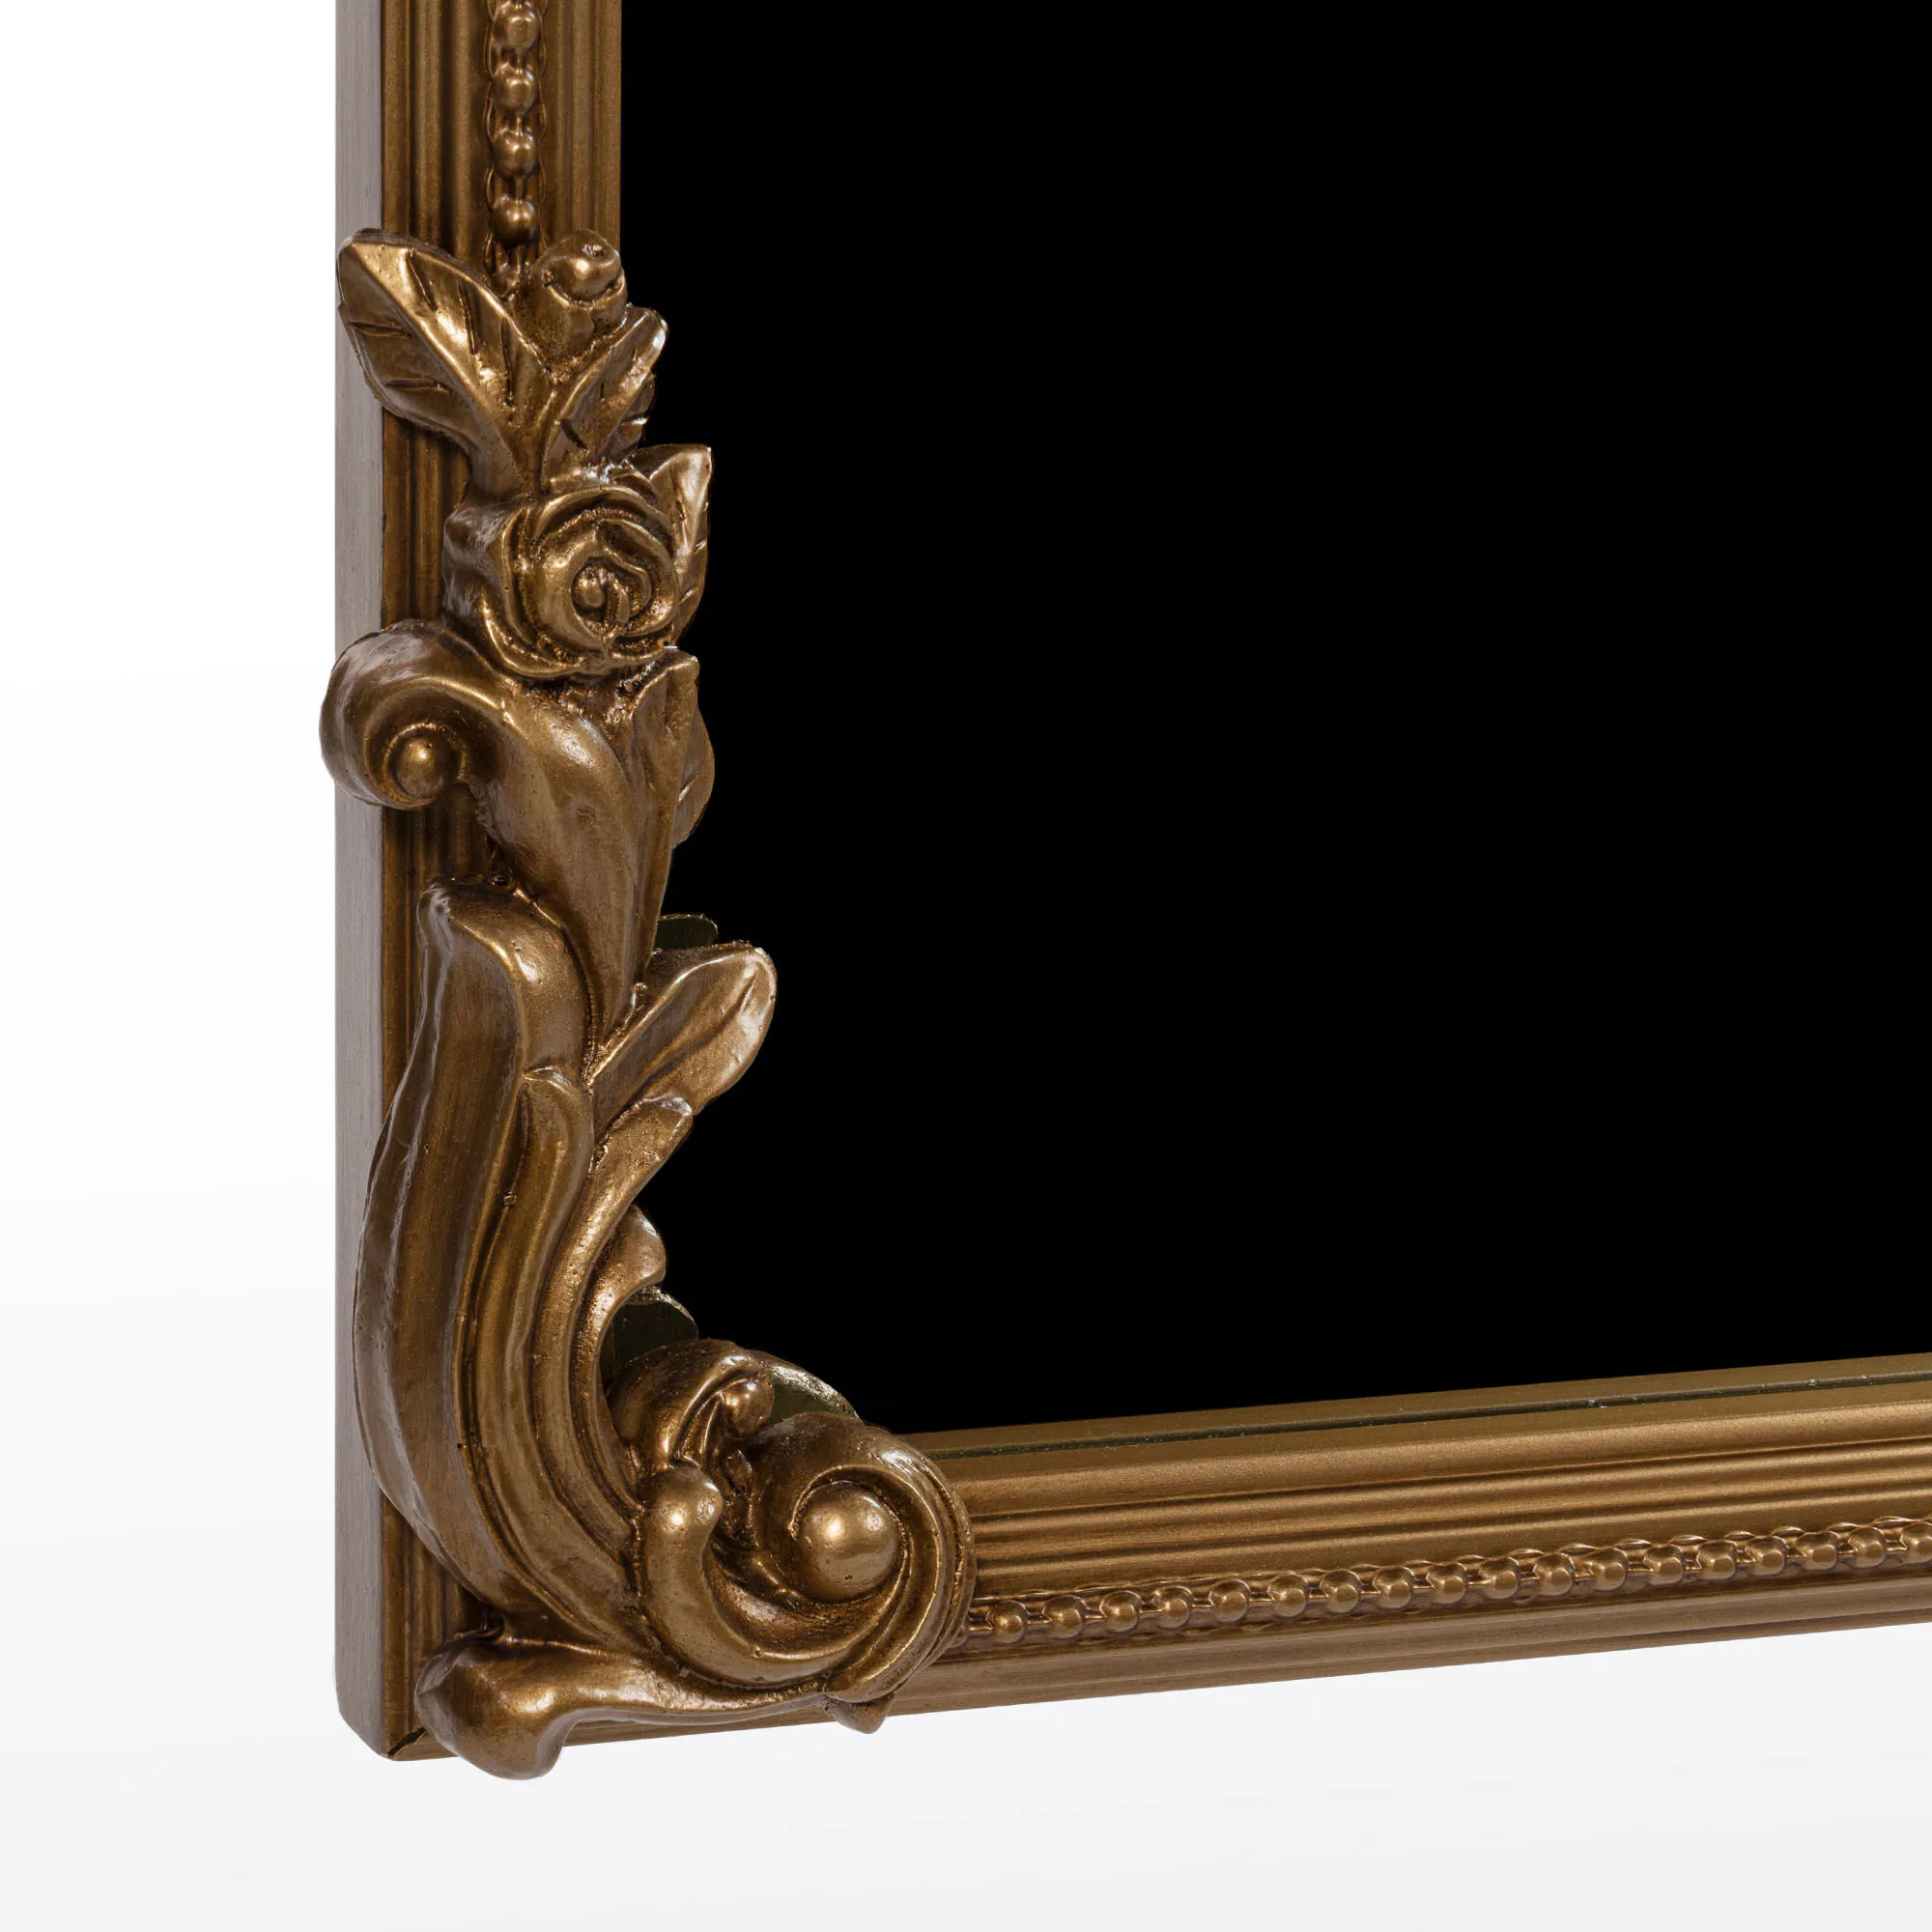 Helkroppsspegel 100x180cm Valvformad Guld Mary